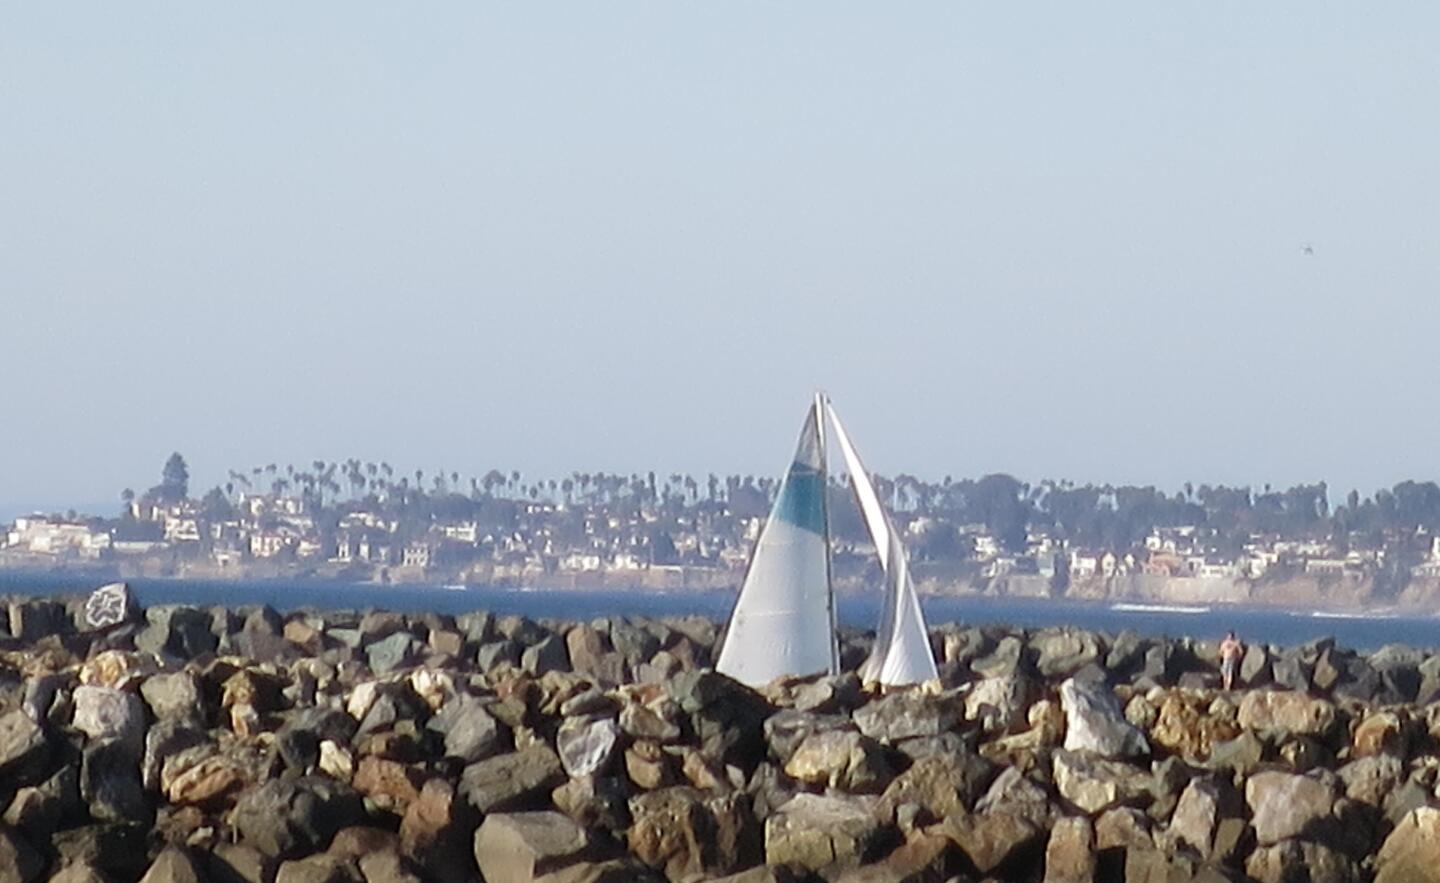 David Little cliffs of Bird Rock as seen from the San Diego River jetty.JPG